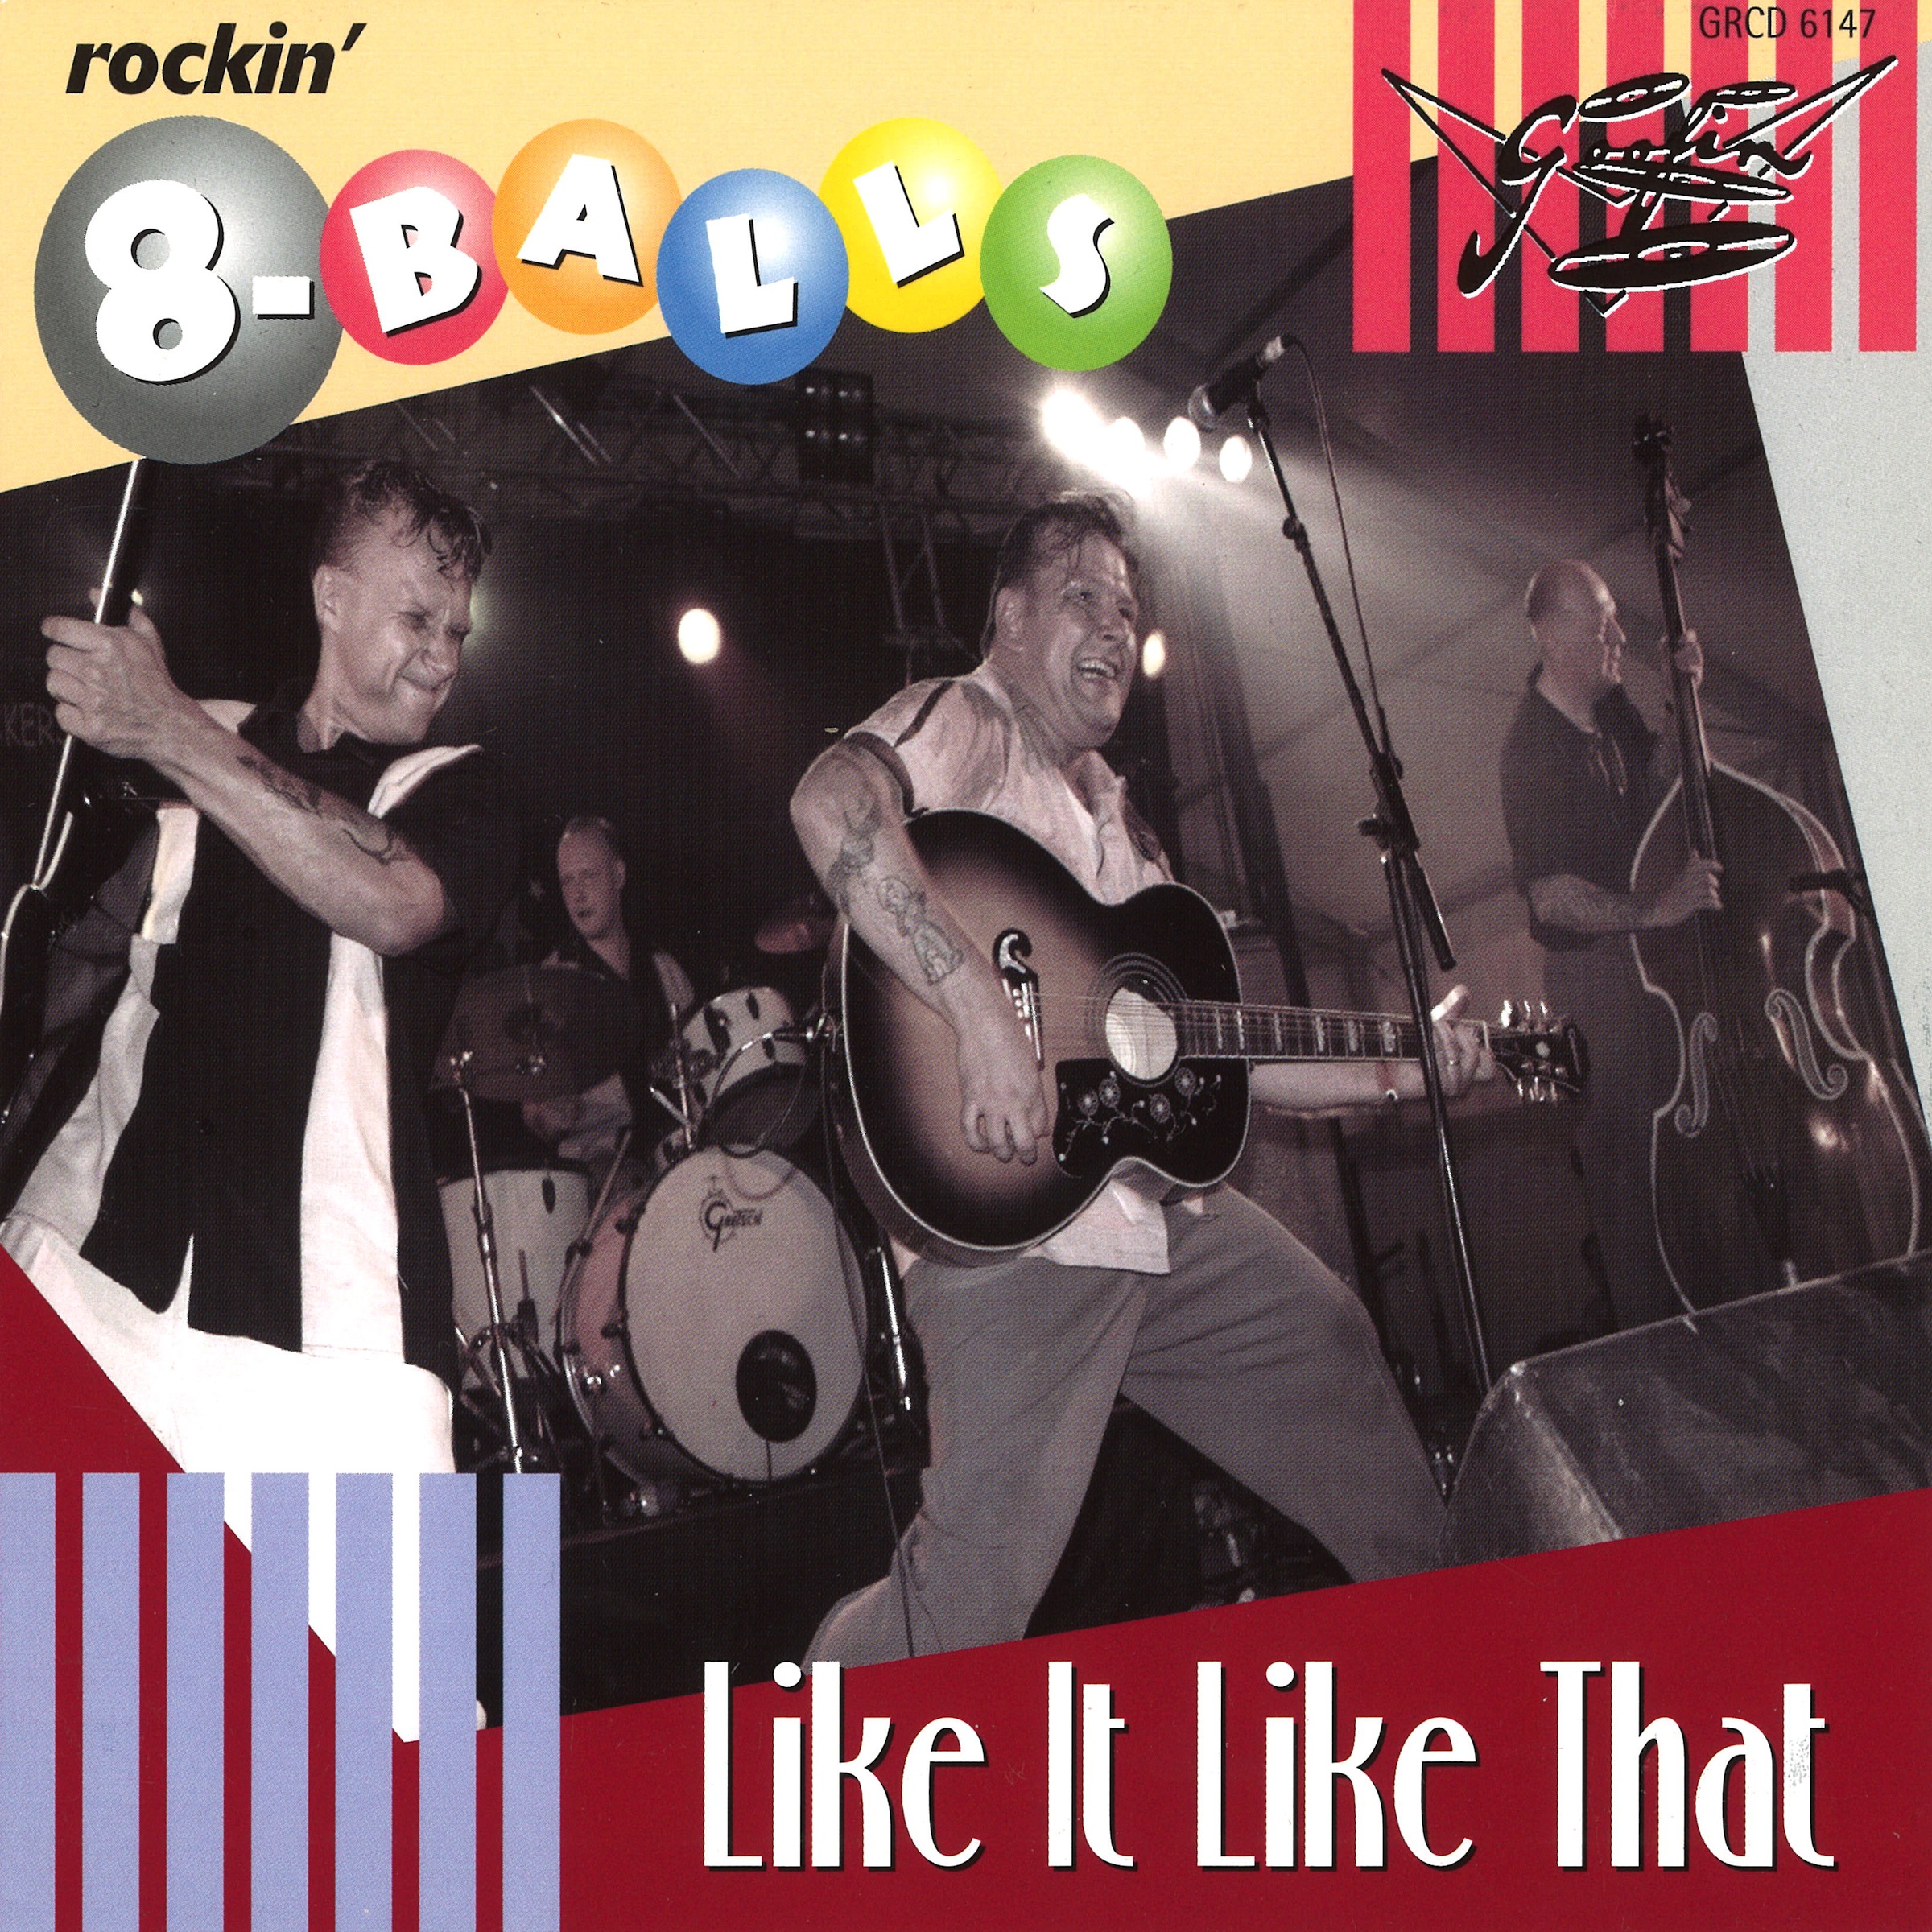 The Rockin' 8-Balls - Like It Like That - CD